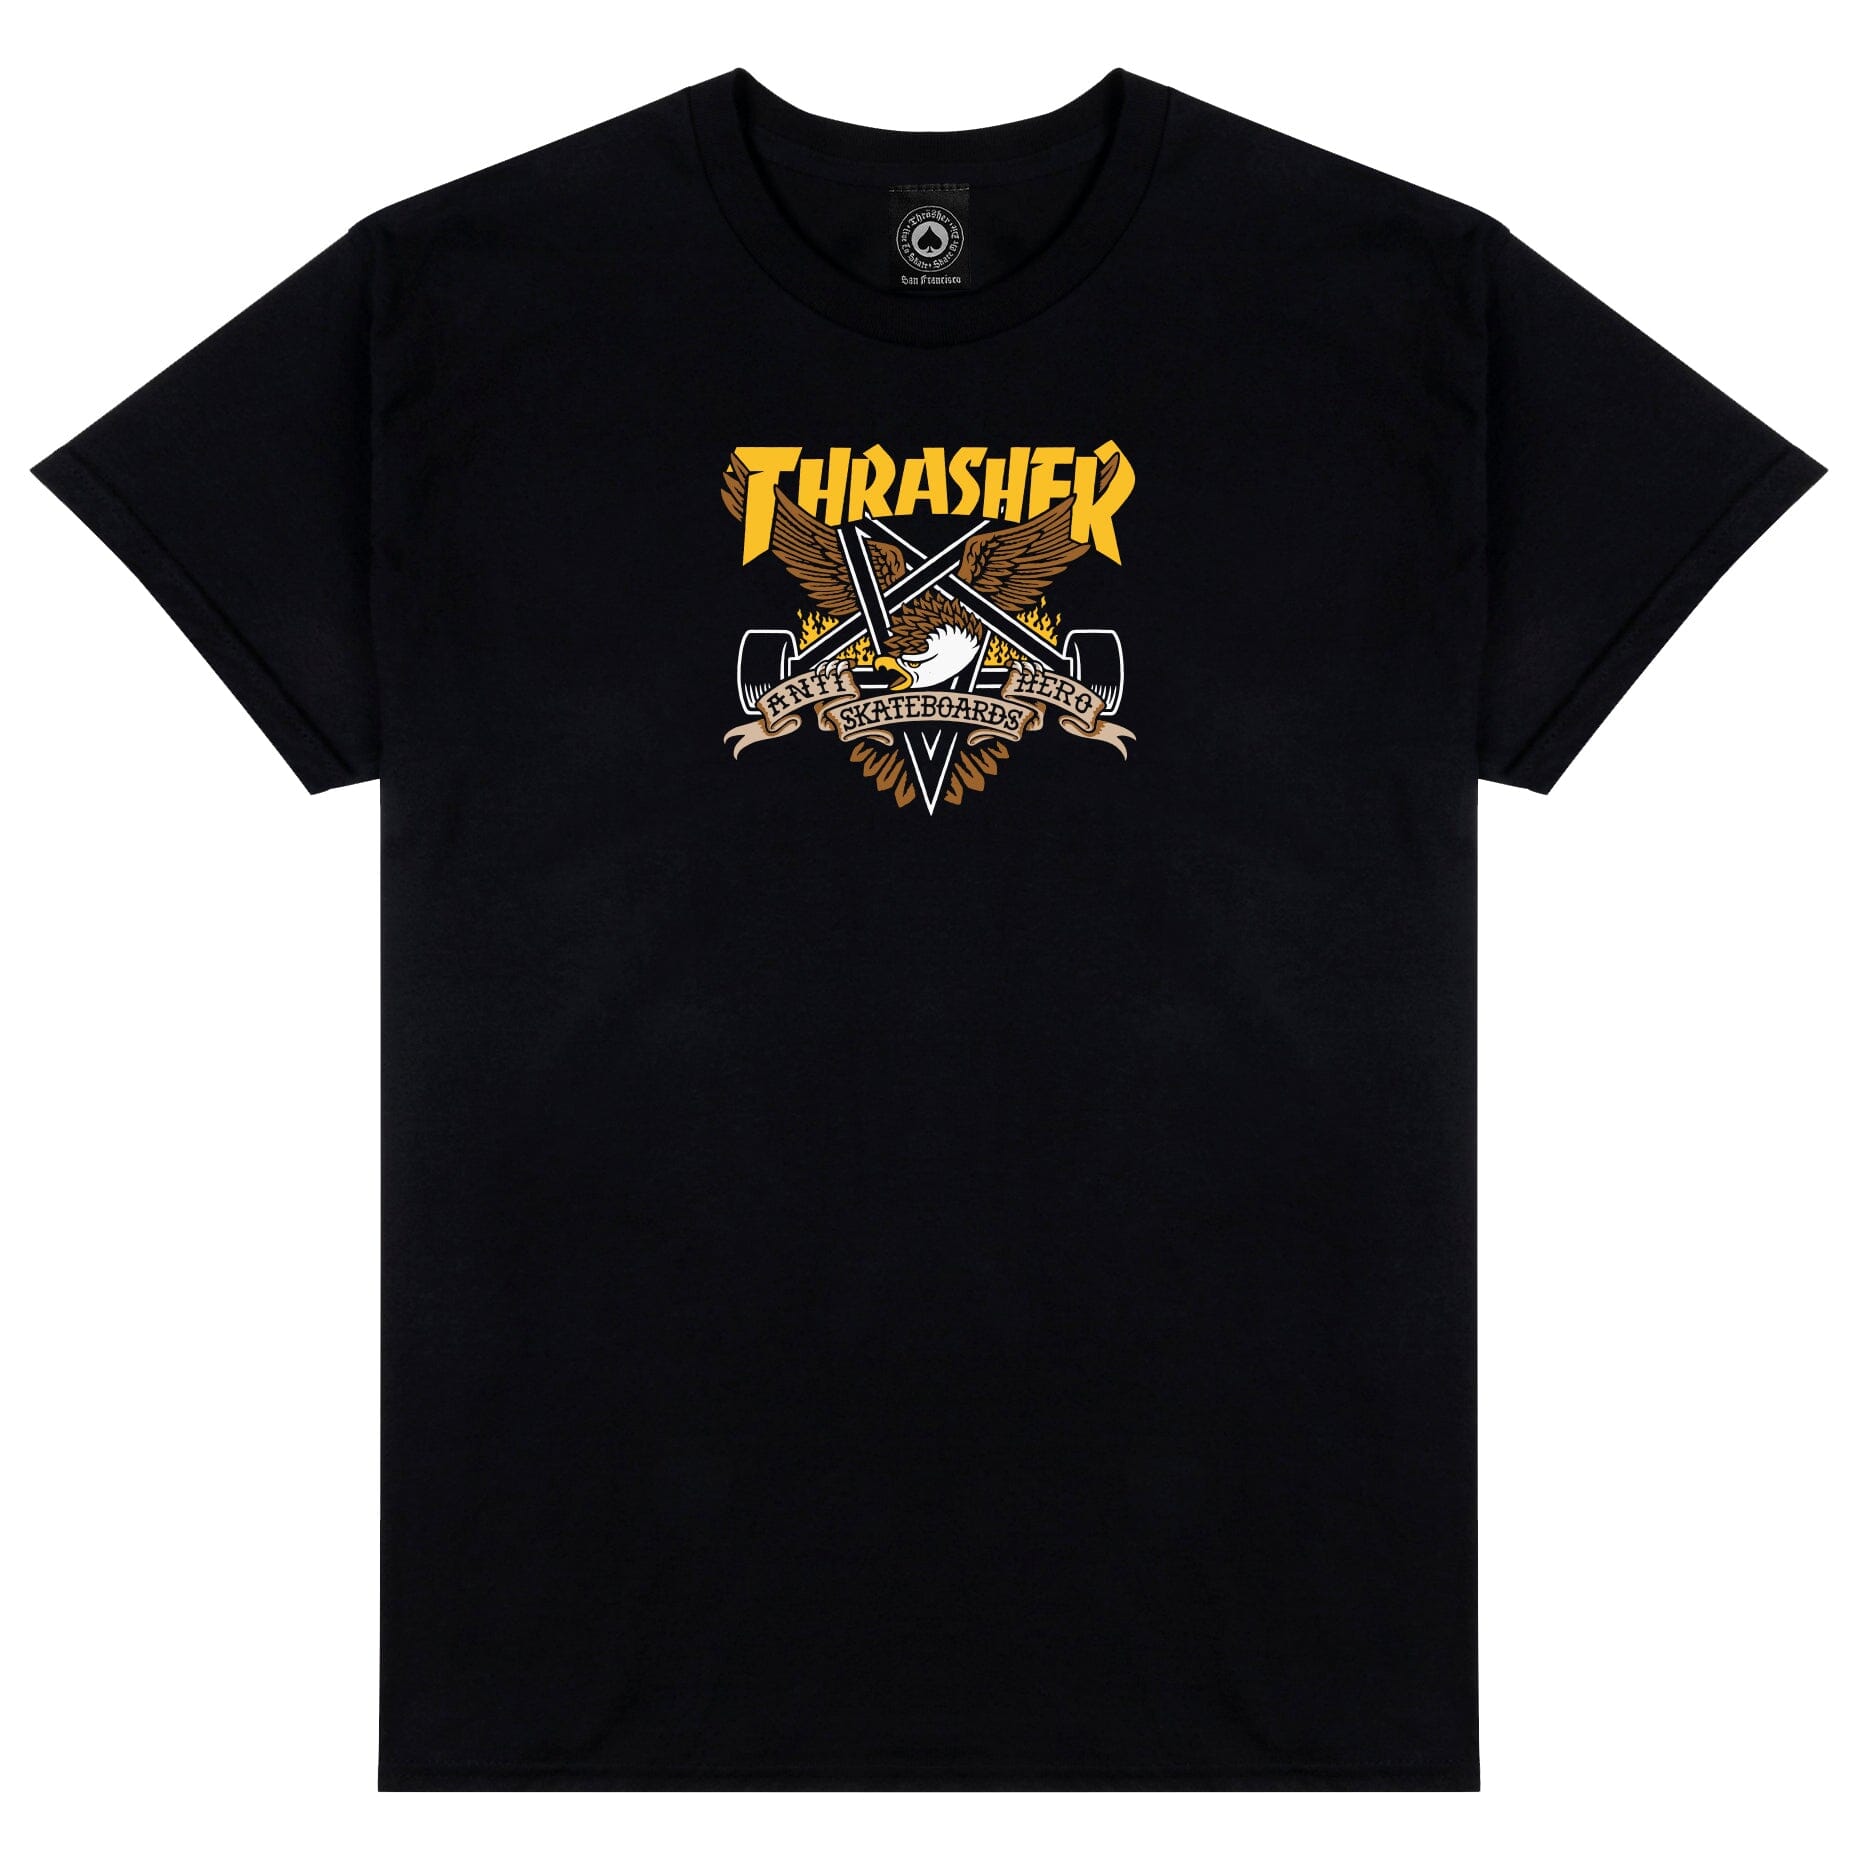 Thrasher x Anti Hero Eaglegram Tee Black tees Thrasher Magazine 